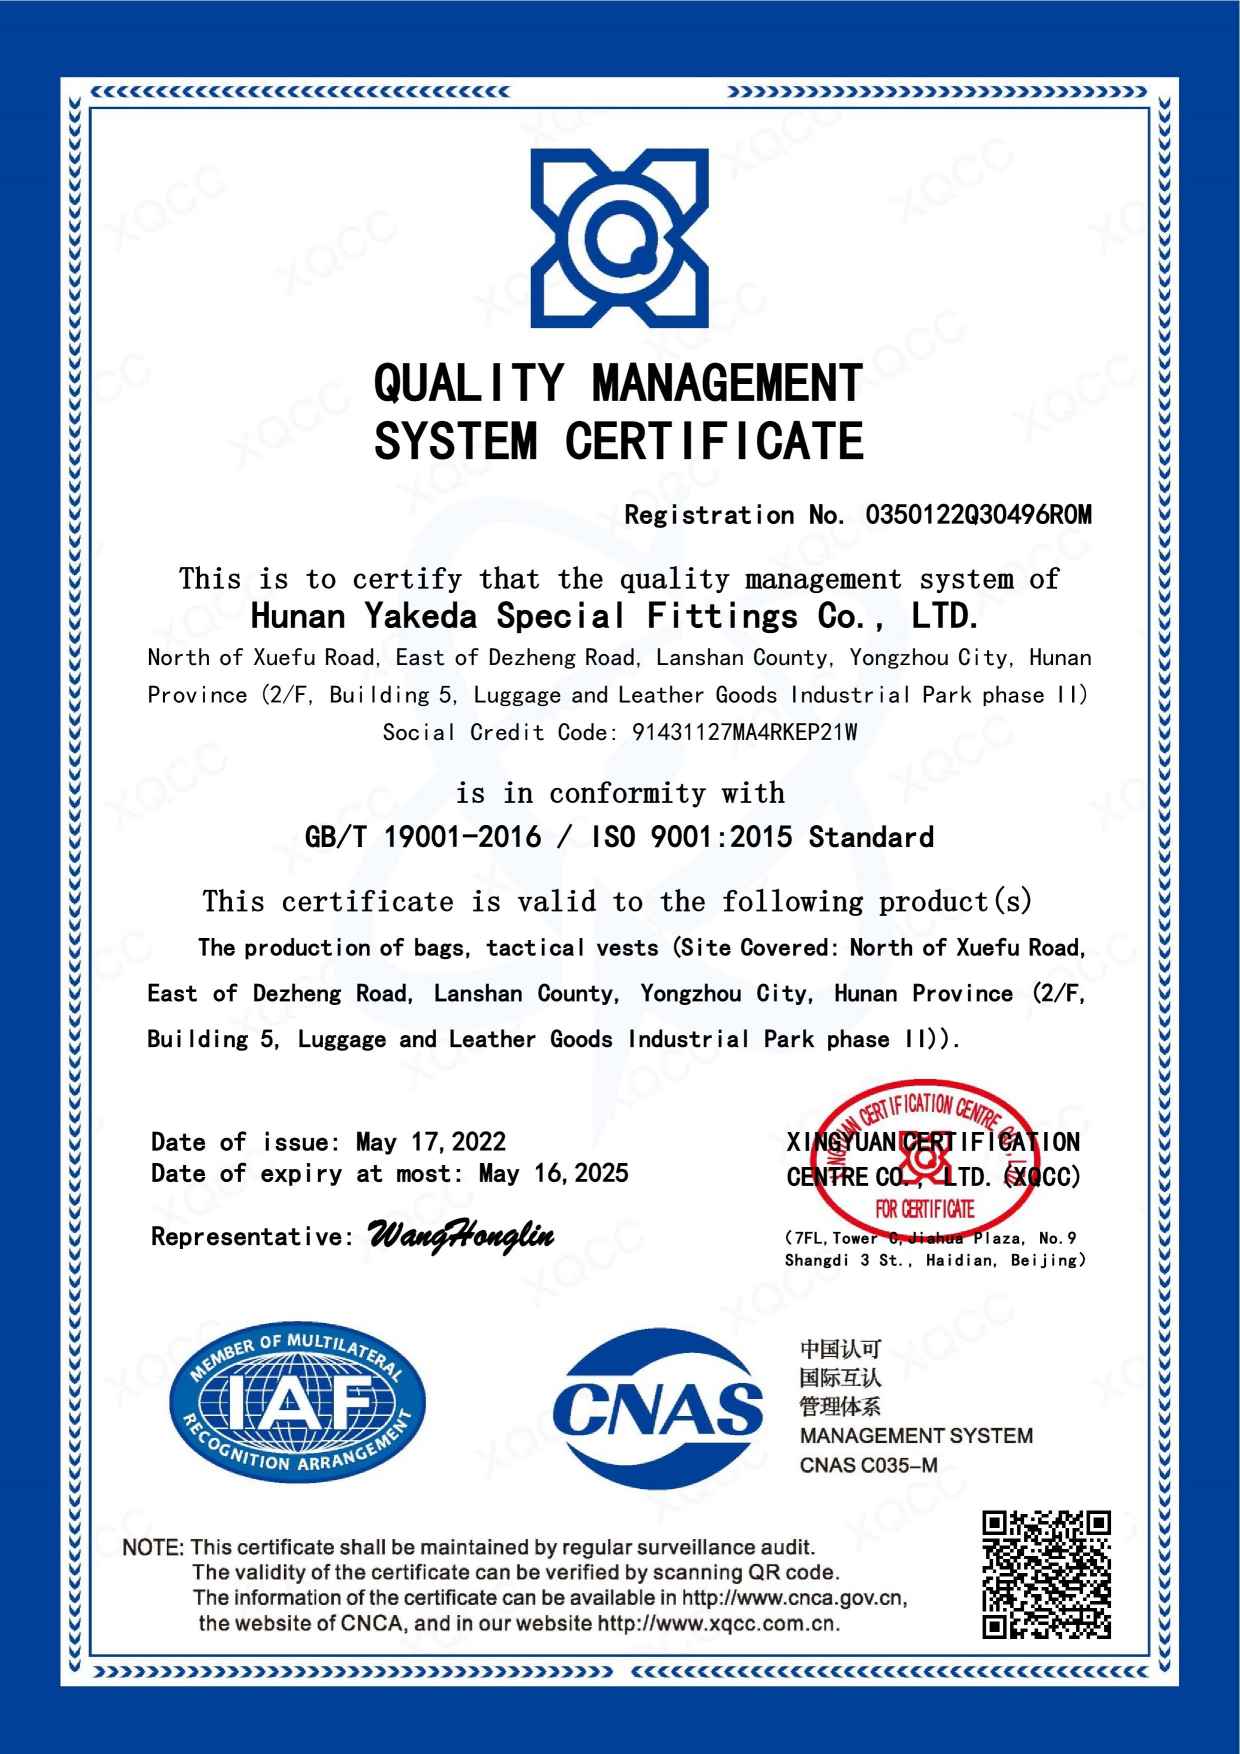 ISO 9001:2015 Standard